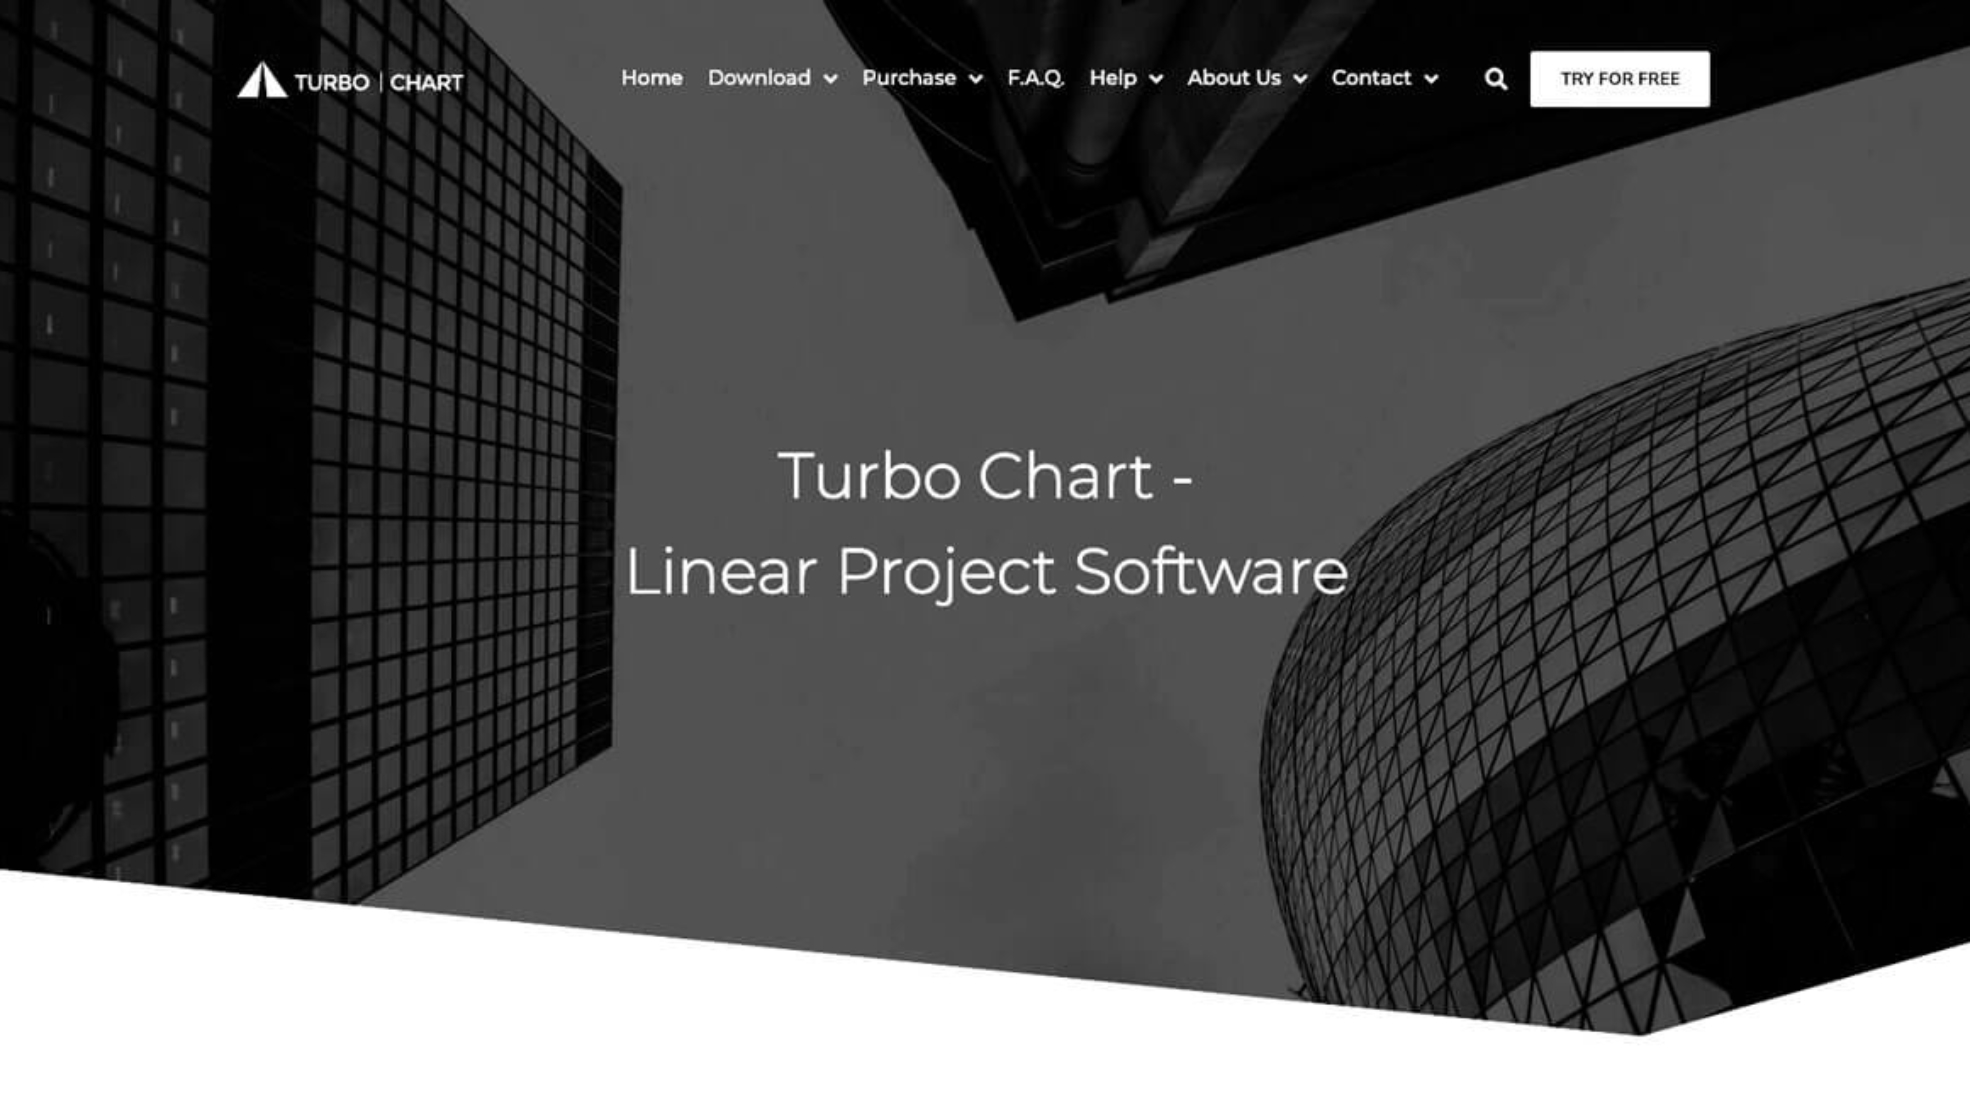 Turbo Chart homepage